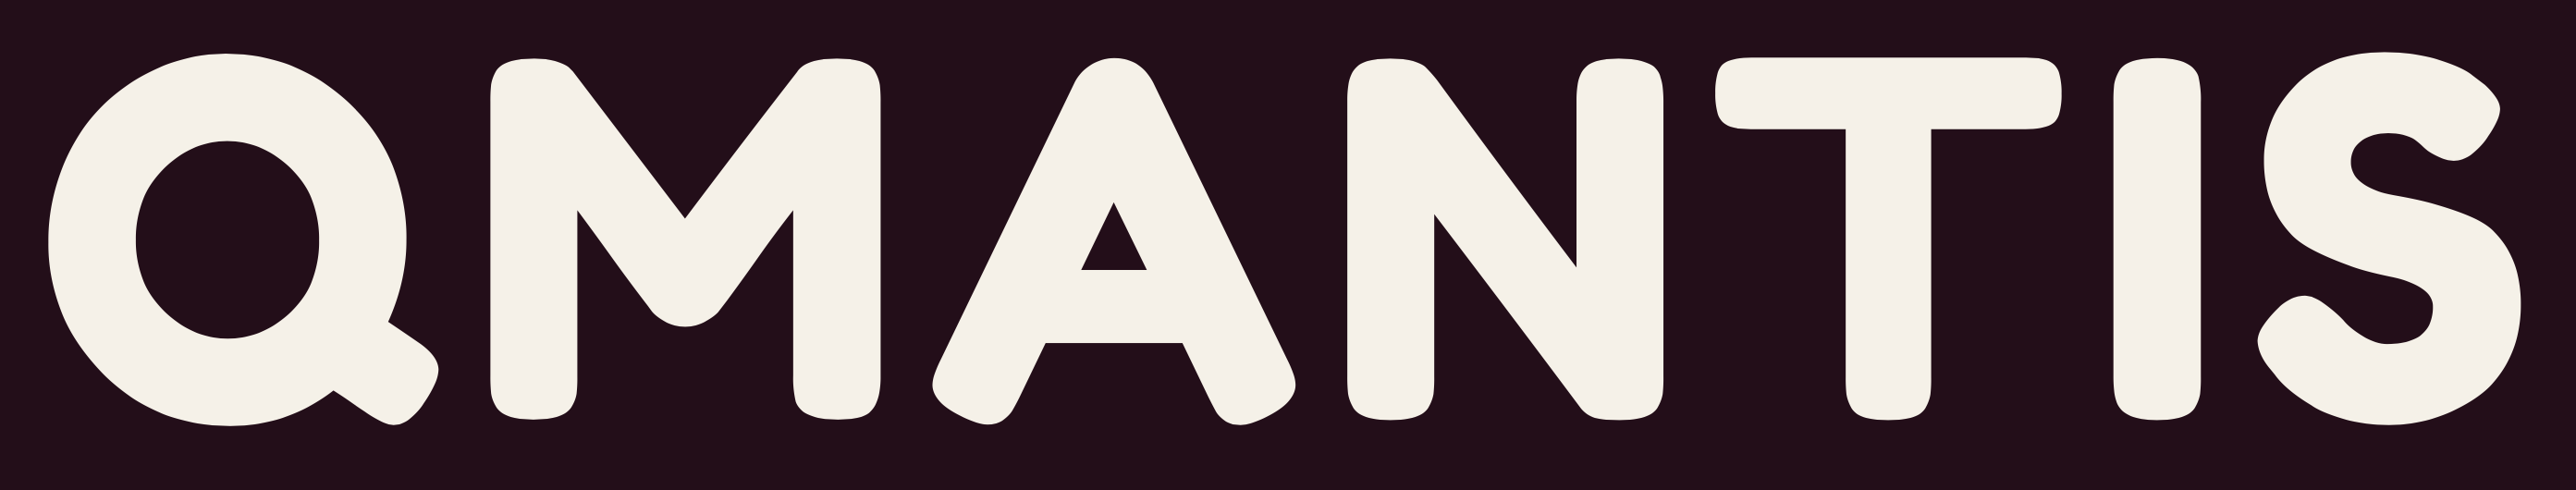 Qmantis logo text